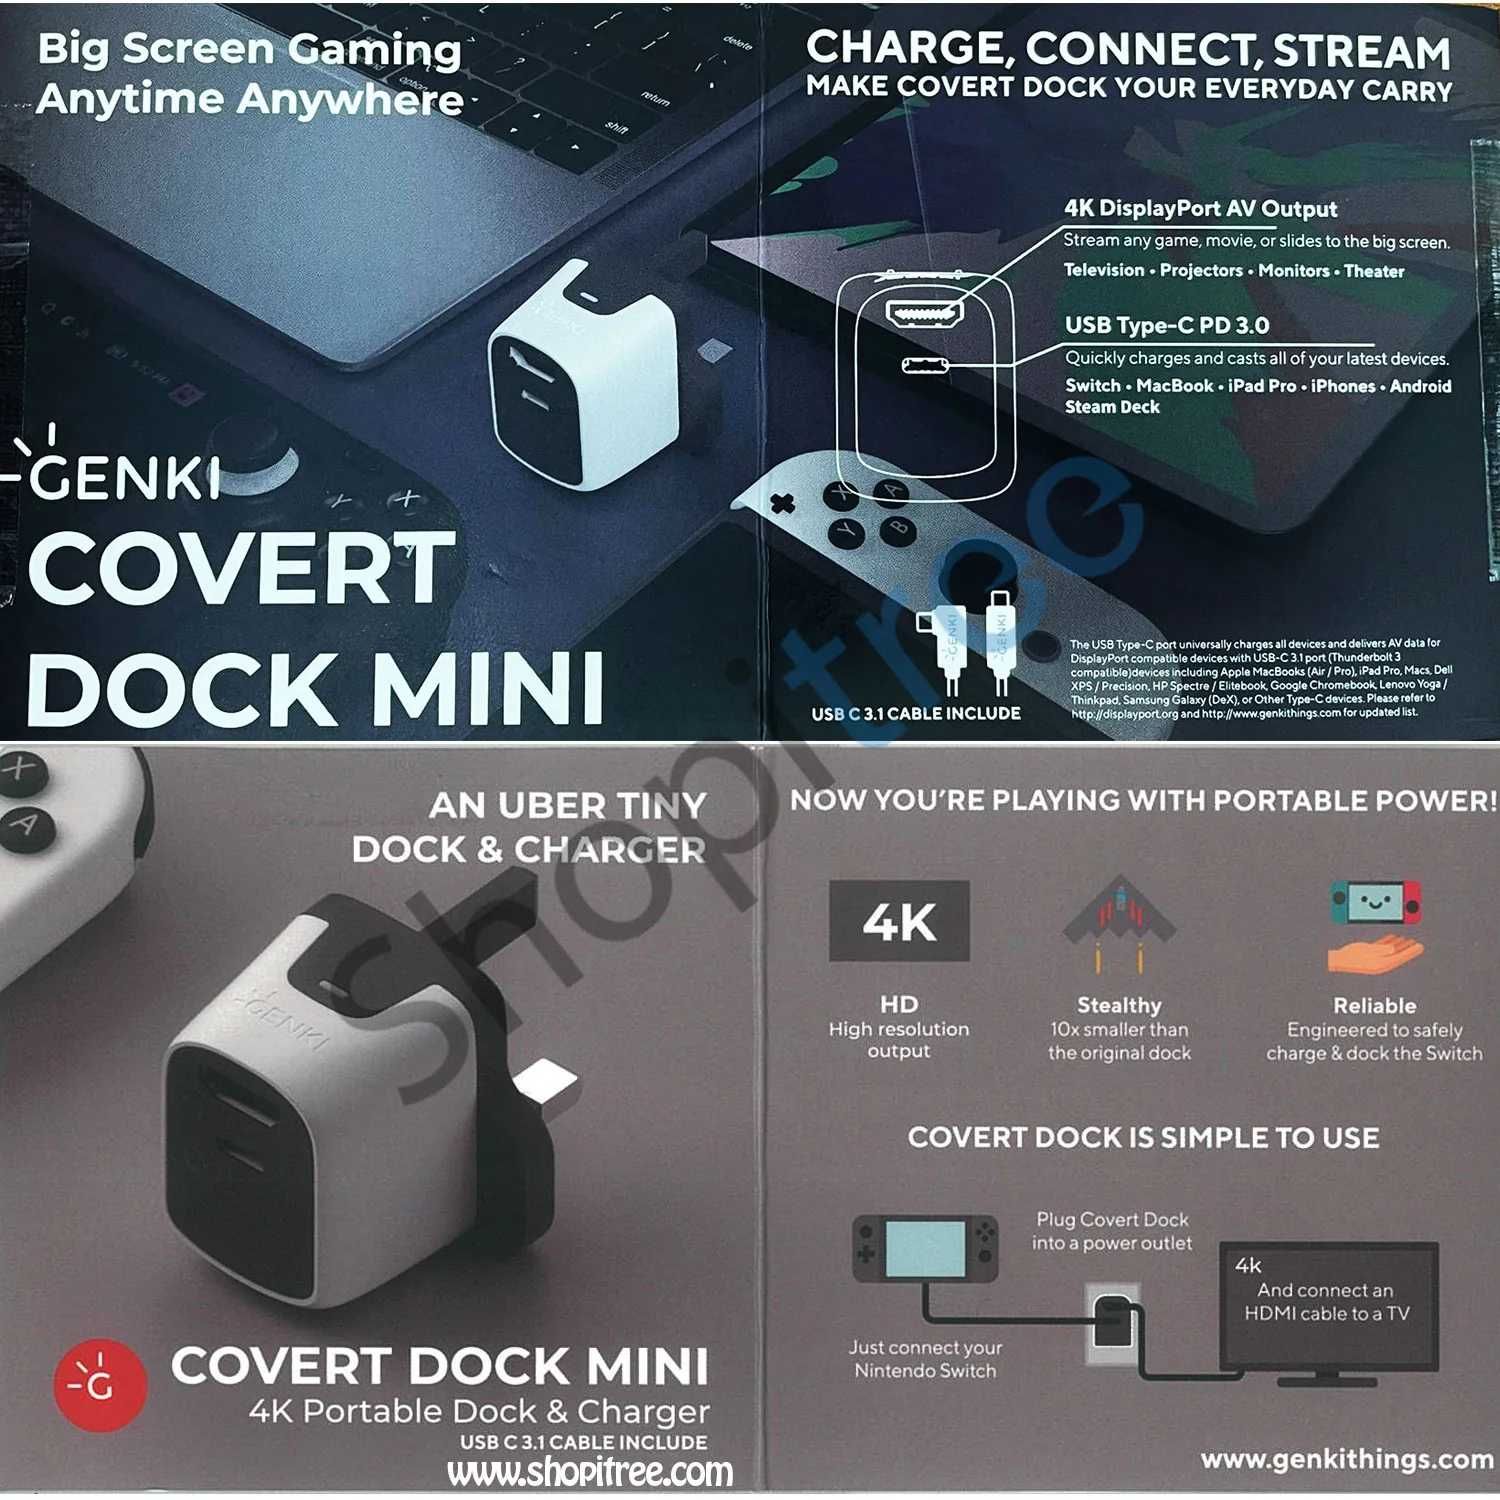 Genki Covert Dock Mini Nintendo Switch Steam Deck